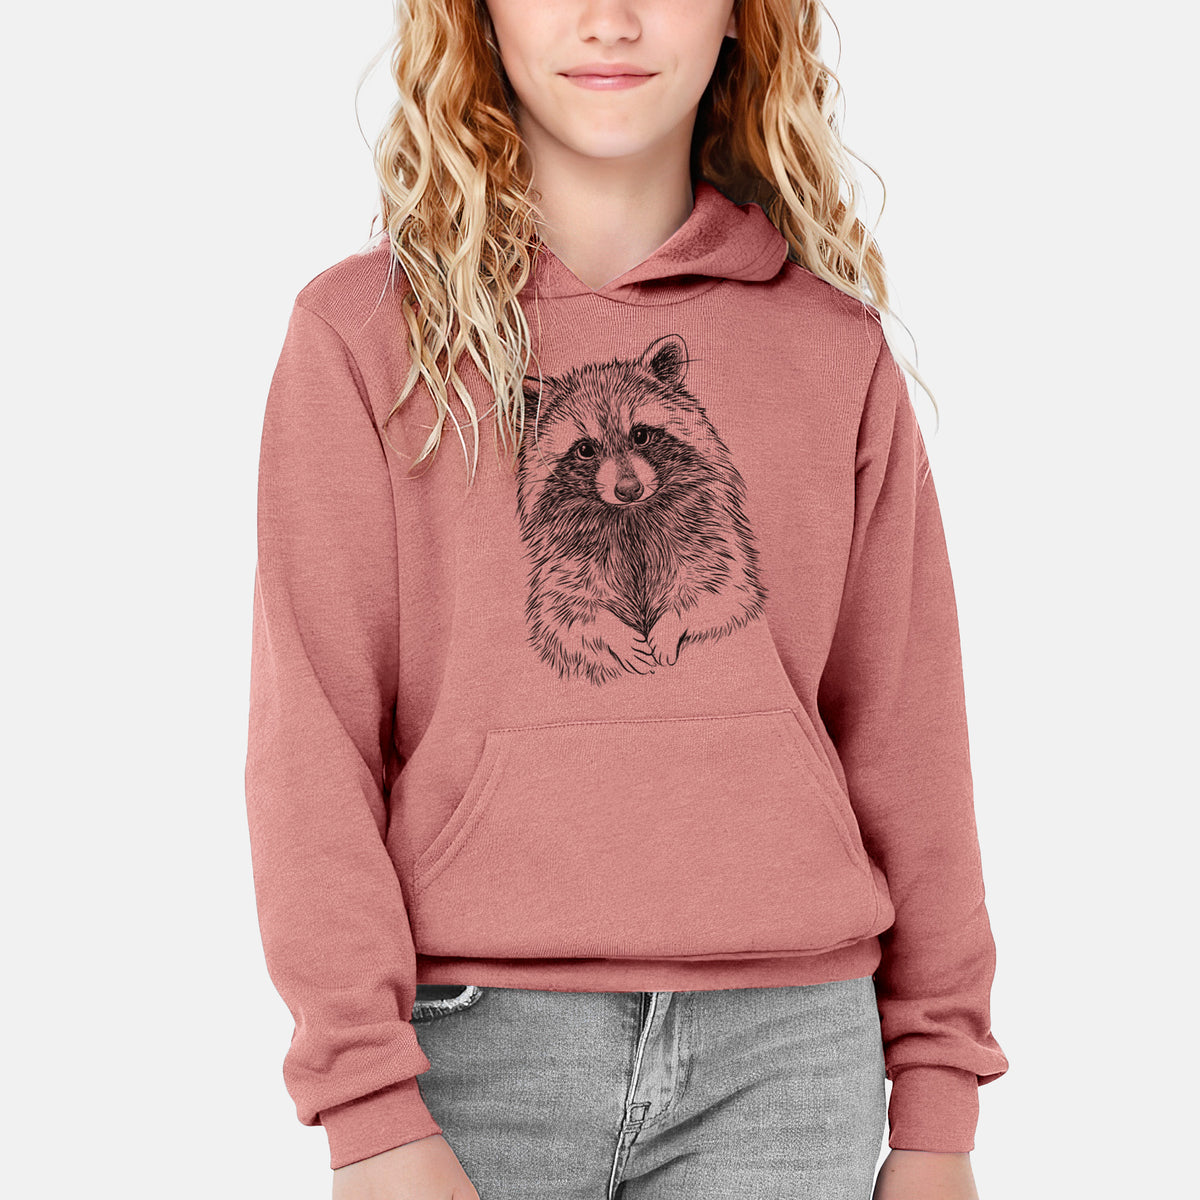 Raccoon - Procyon lotor - Youth Hoodie Sweatshirt